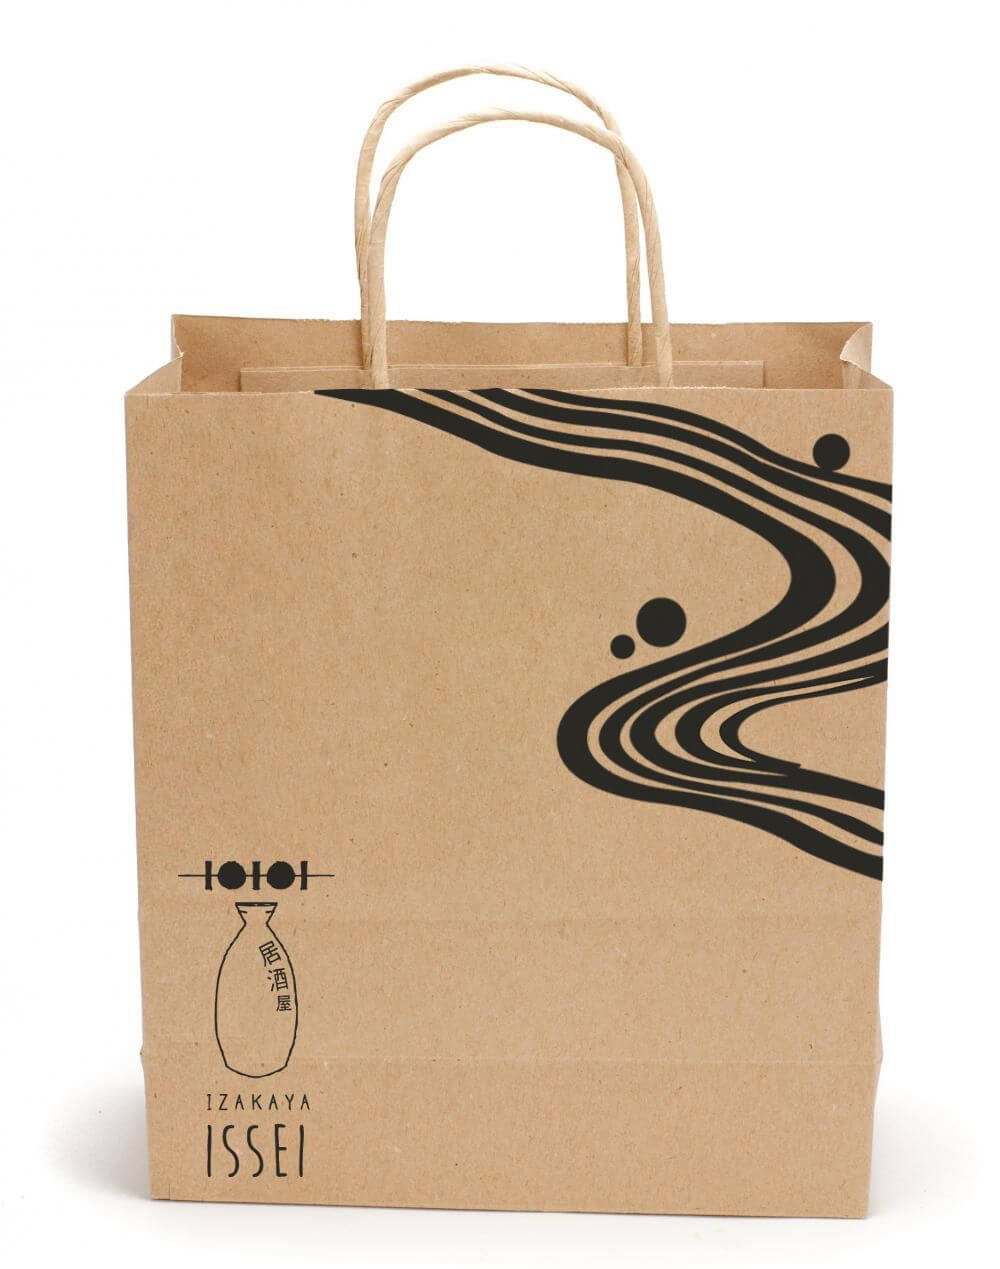 Custom Printed Paper Bags  Logo Printed  Branded Paper Bags